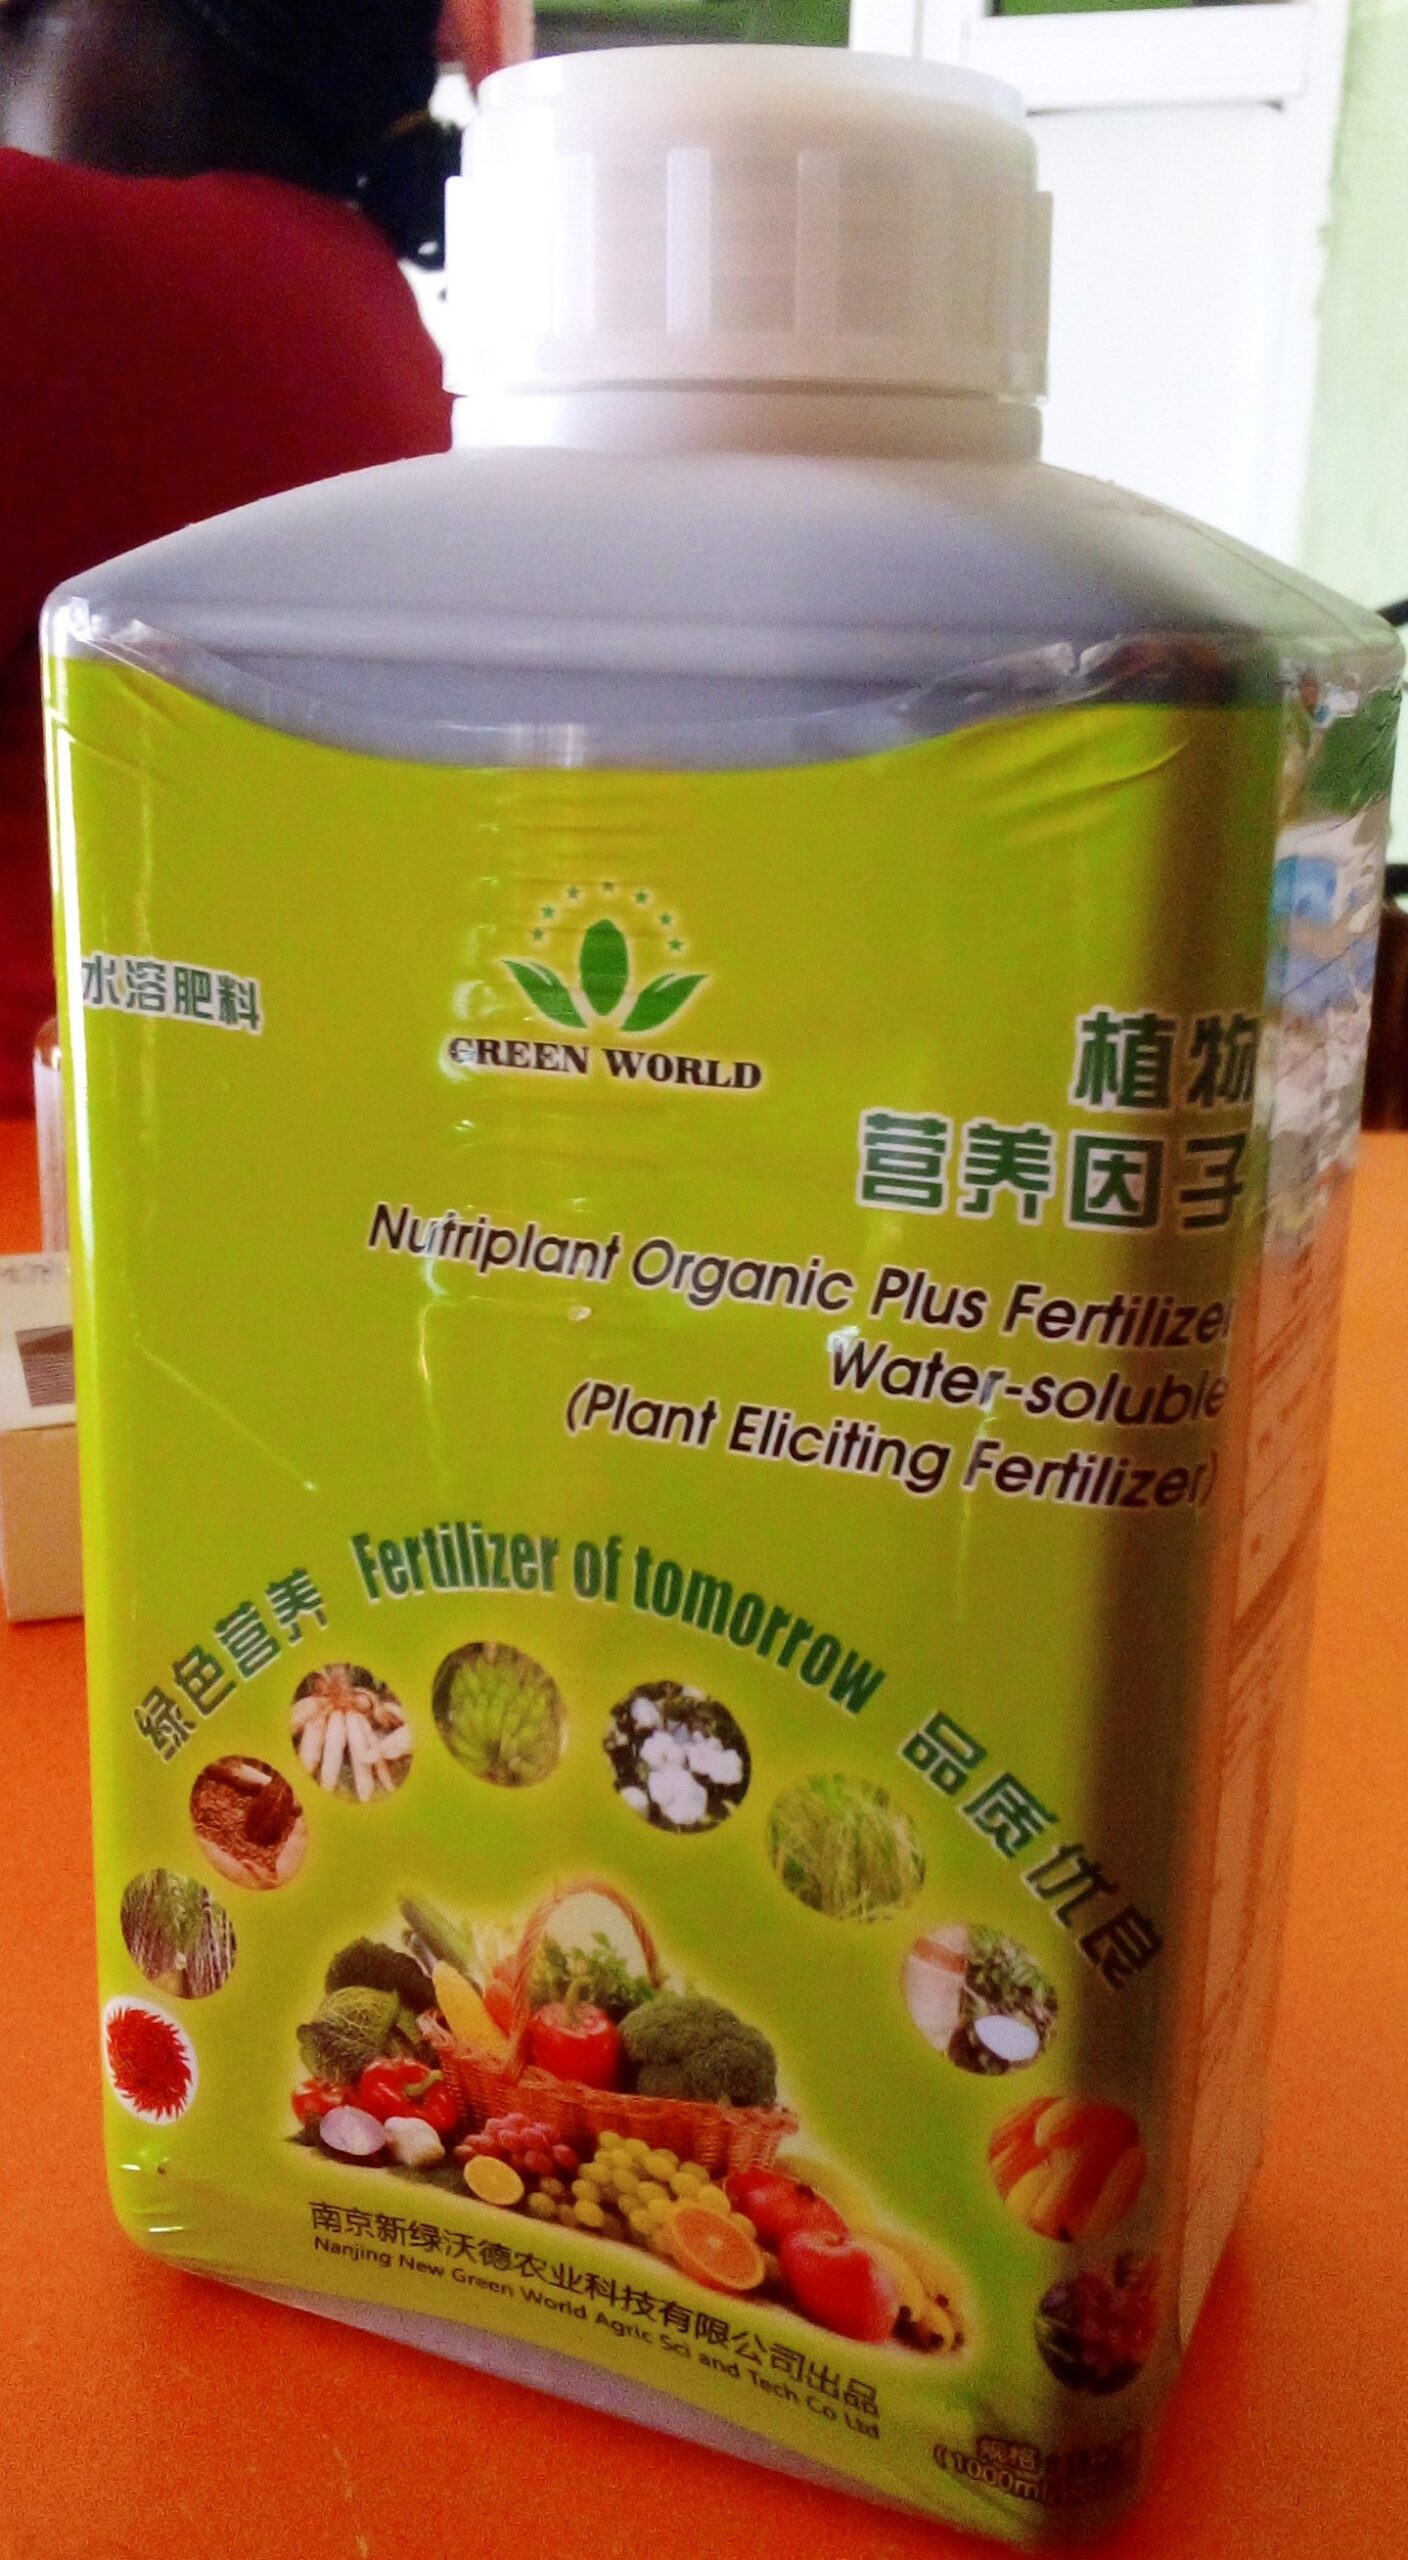 Green world Nutriplant Organic Plus Fertilizer